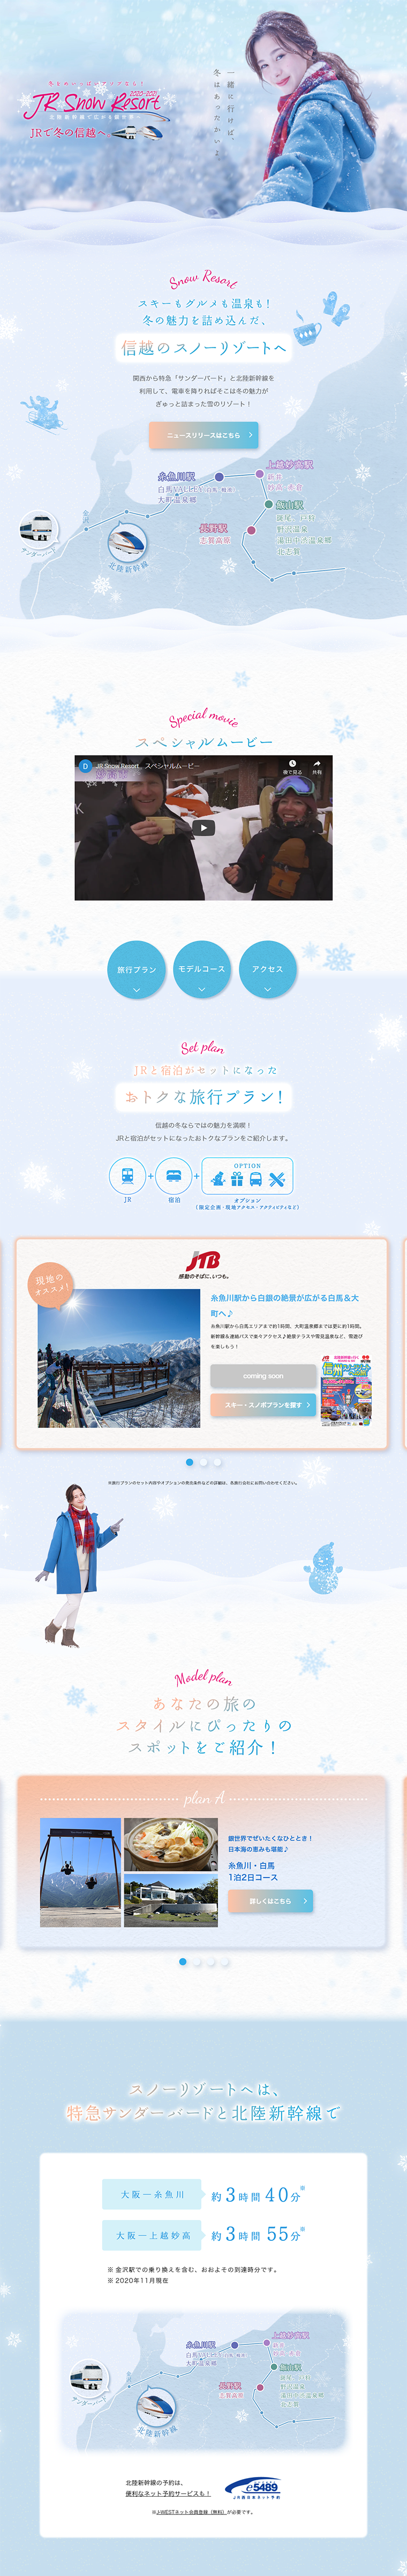 JR Snow Resort 2020-2021 キャンペーン_pc_1